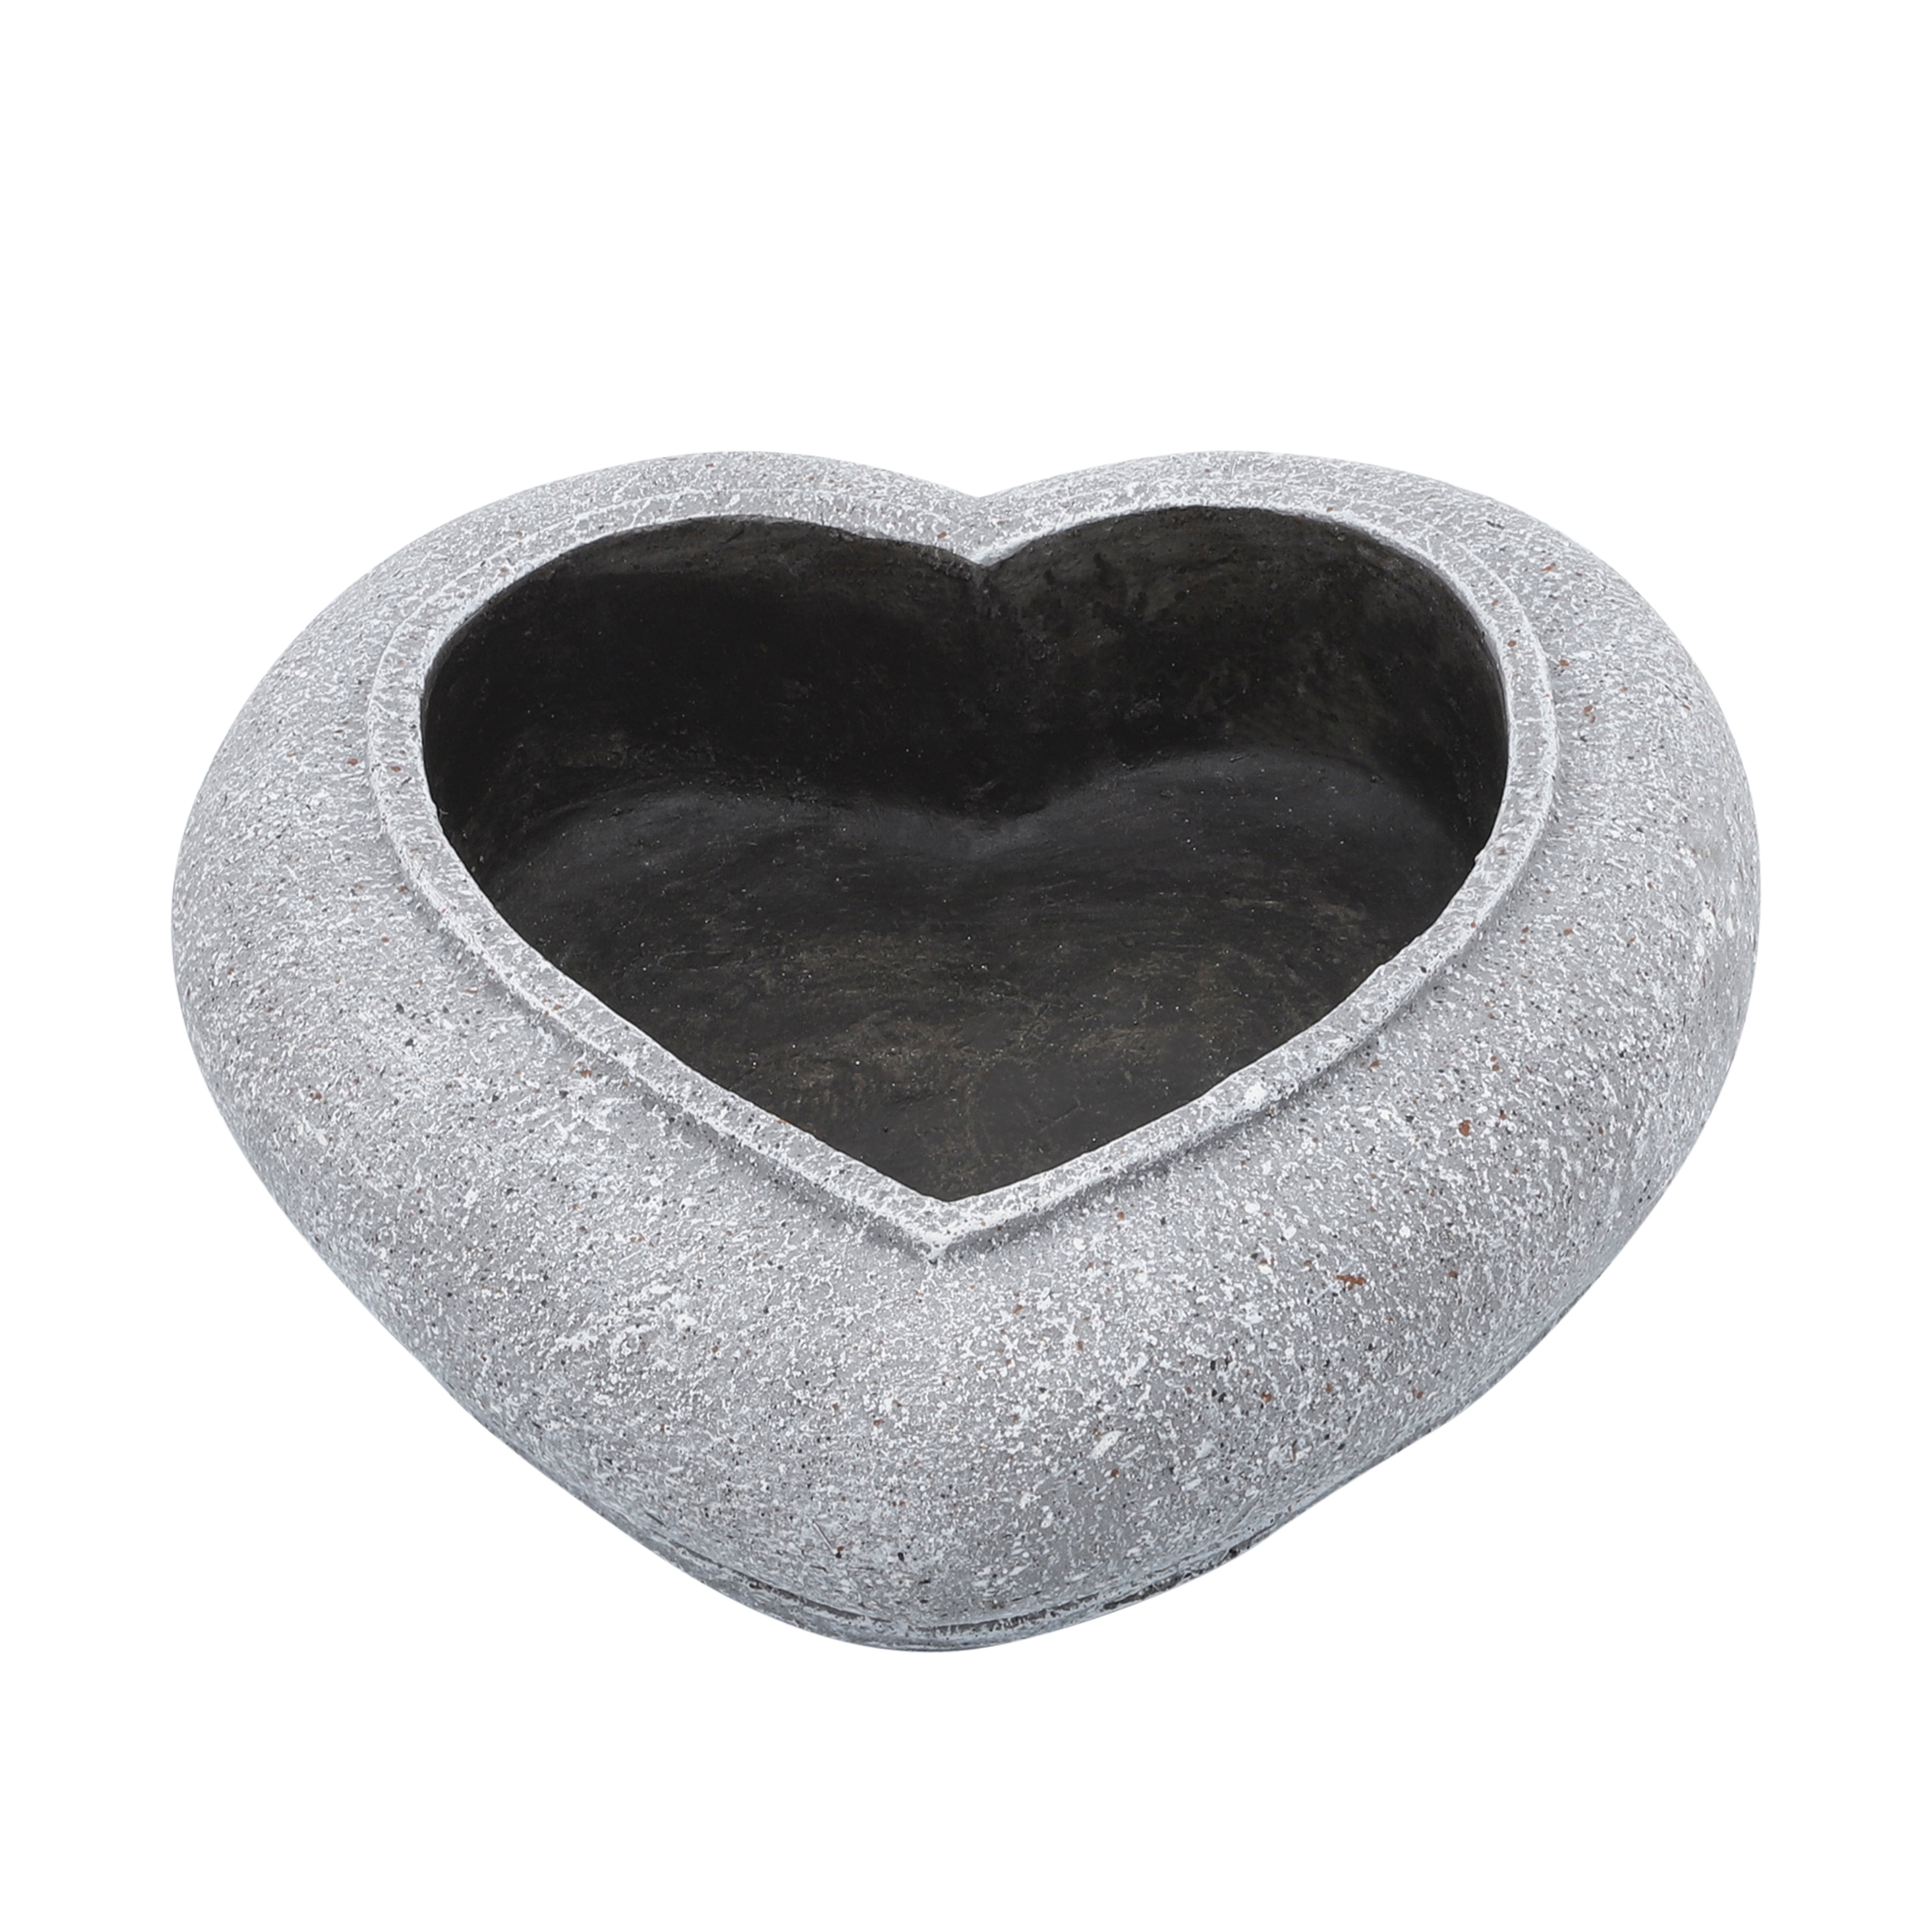 6 X 12 inch Traditional Heart-Shaped Resin Bird Feeder grey 